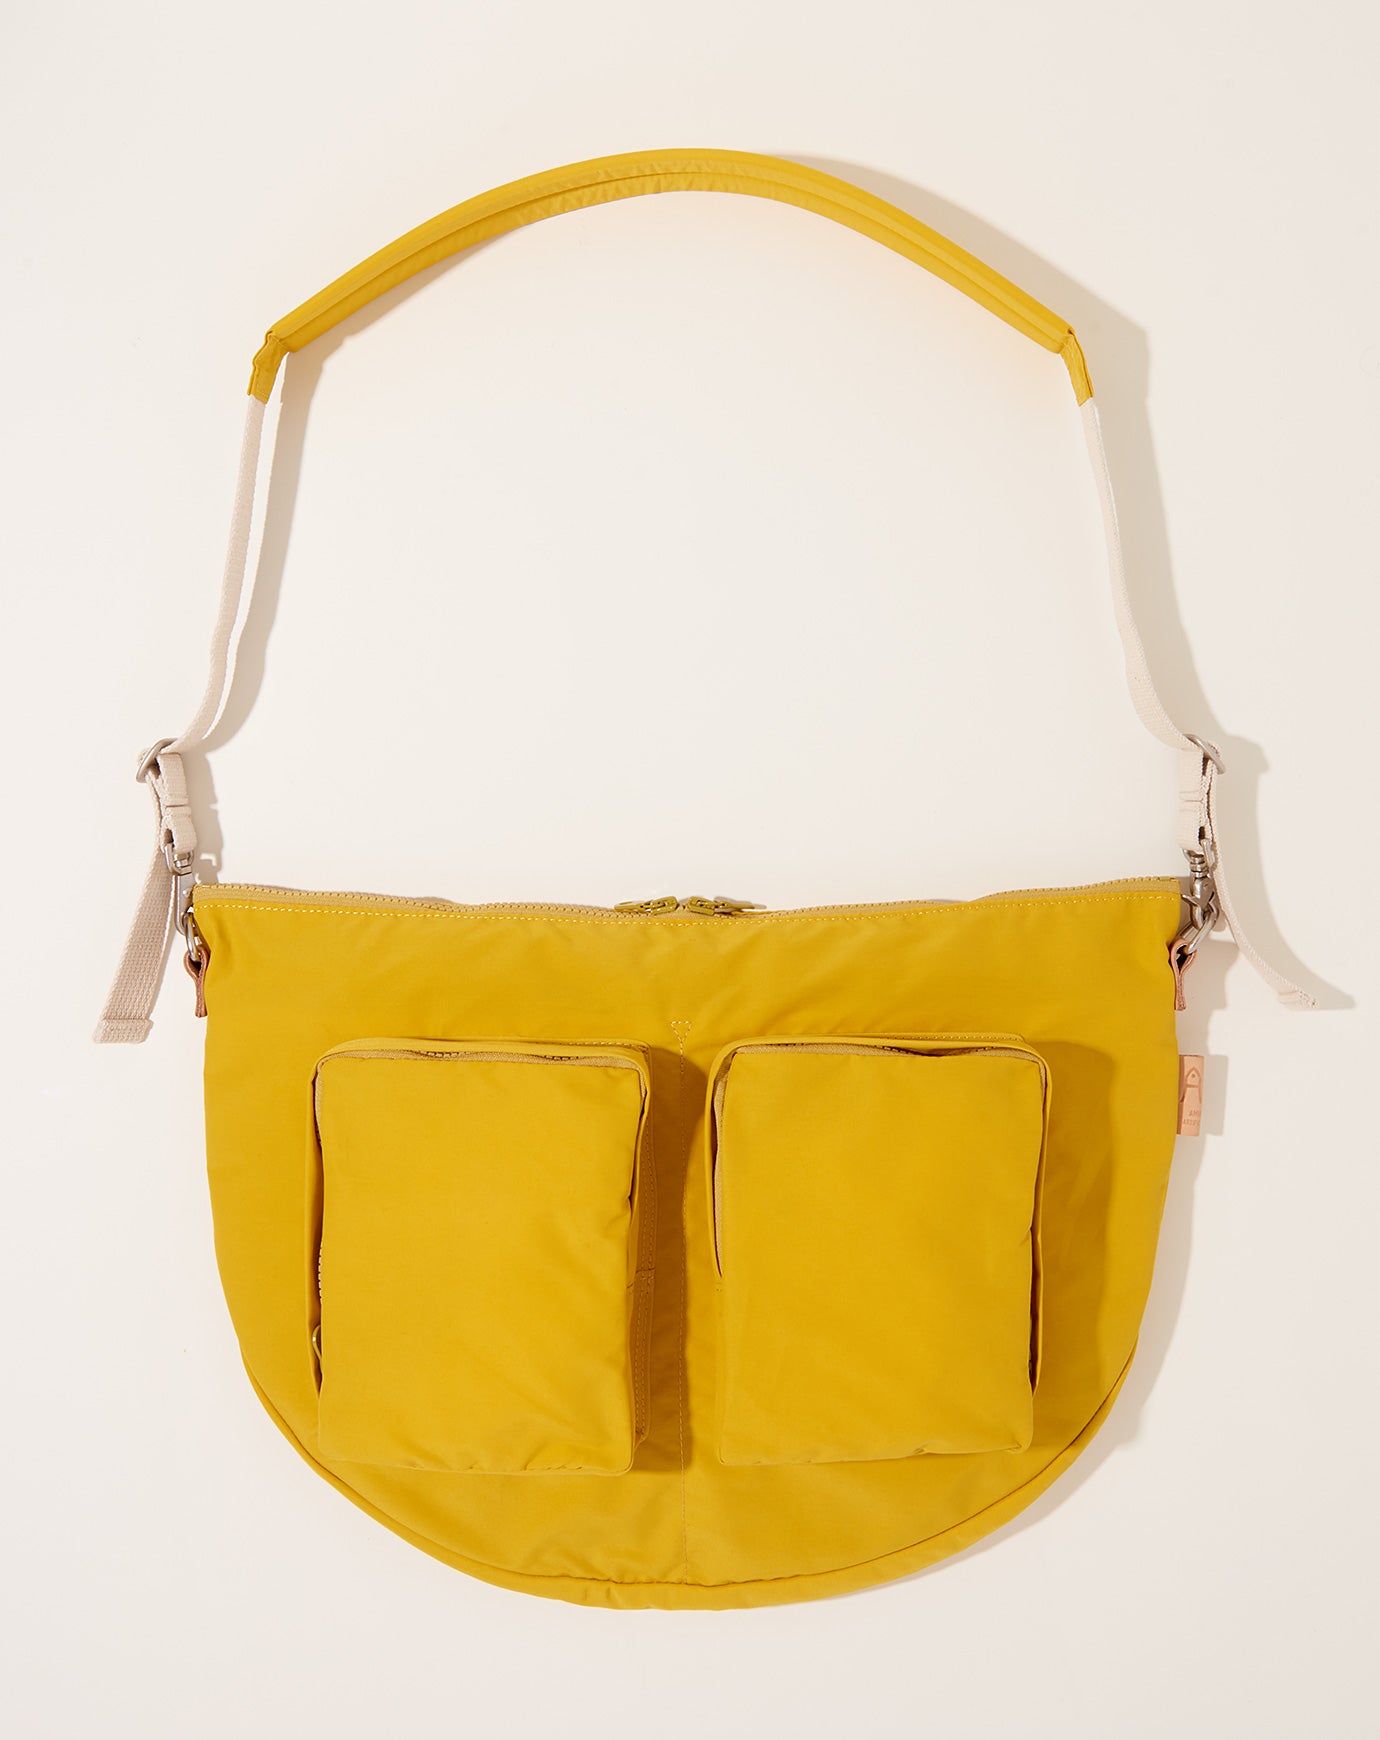 Amiacalva N/C Cloth Bodybag in Yellow